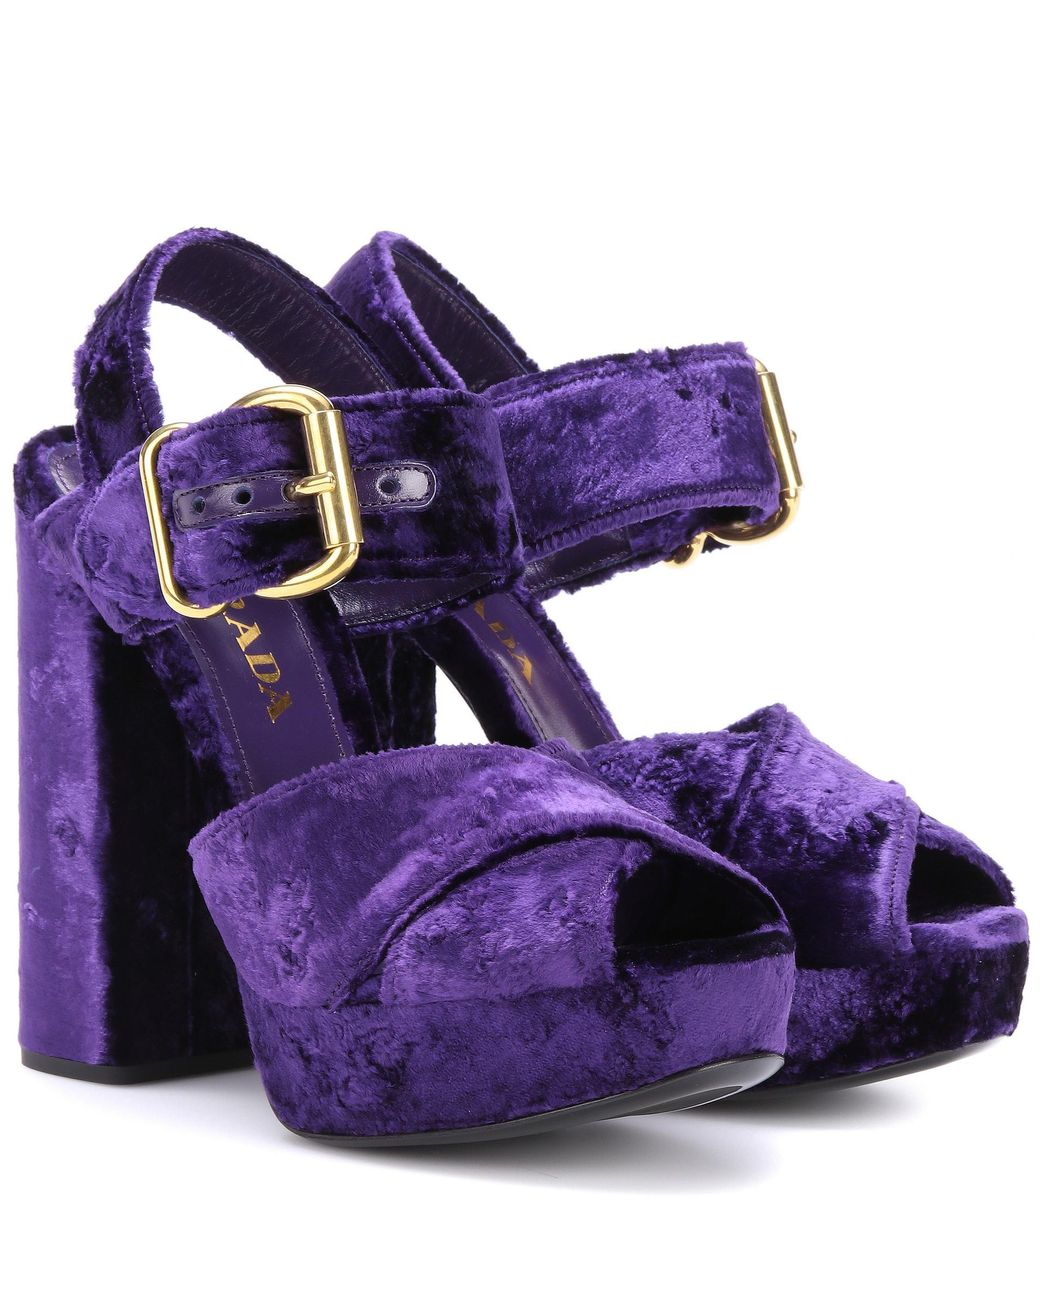 Prada Velvet Plateau Sandals in Purple | Lyst